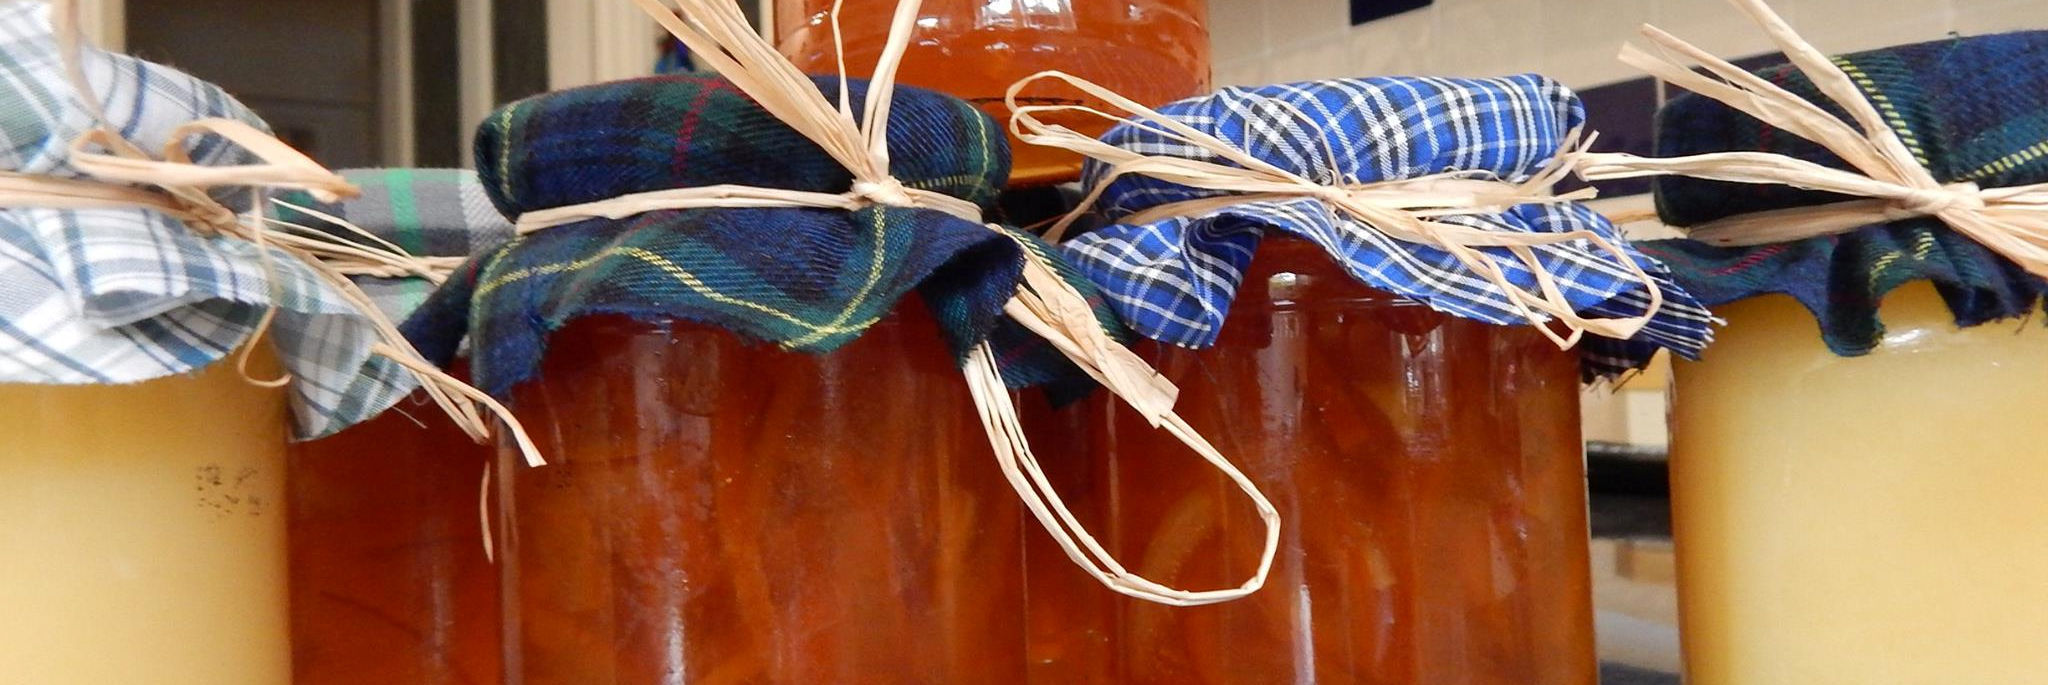 Making Marmalade in Scotland